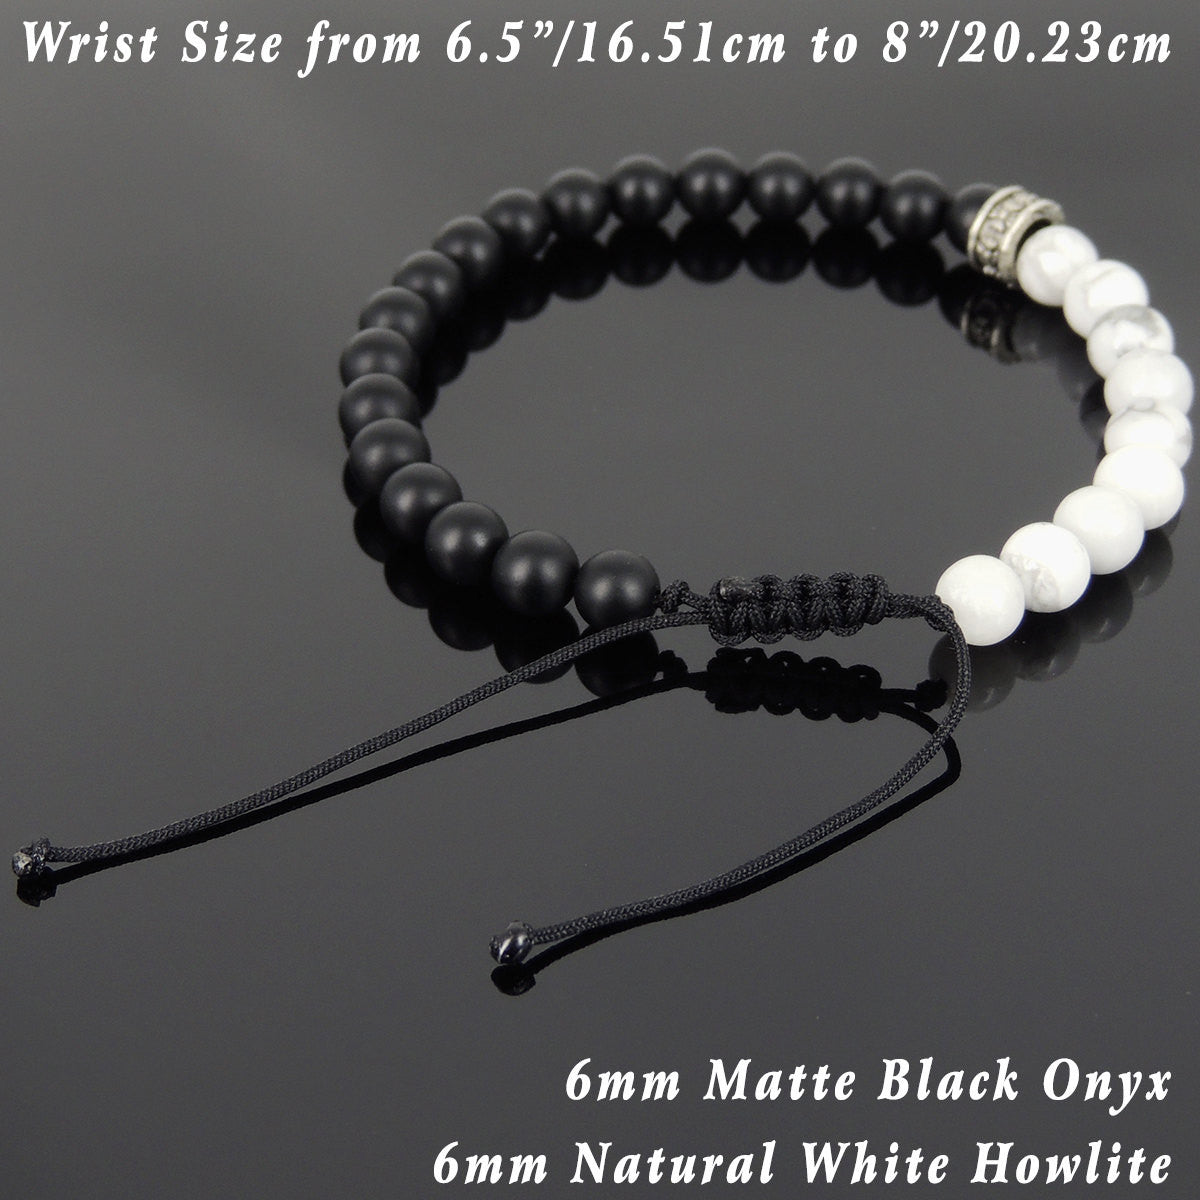 6mm Matte Black Onyx & White Howlite Adjustable Braided Gemstone Bracelet with Genuine S925 Sterling Silver Cross Spacer Bead- Handmade by Gem & Silver BR893